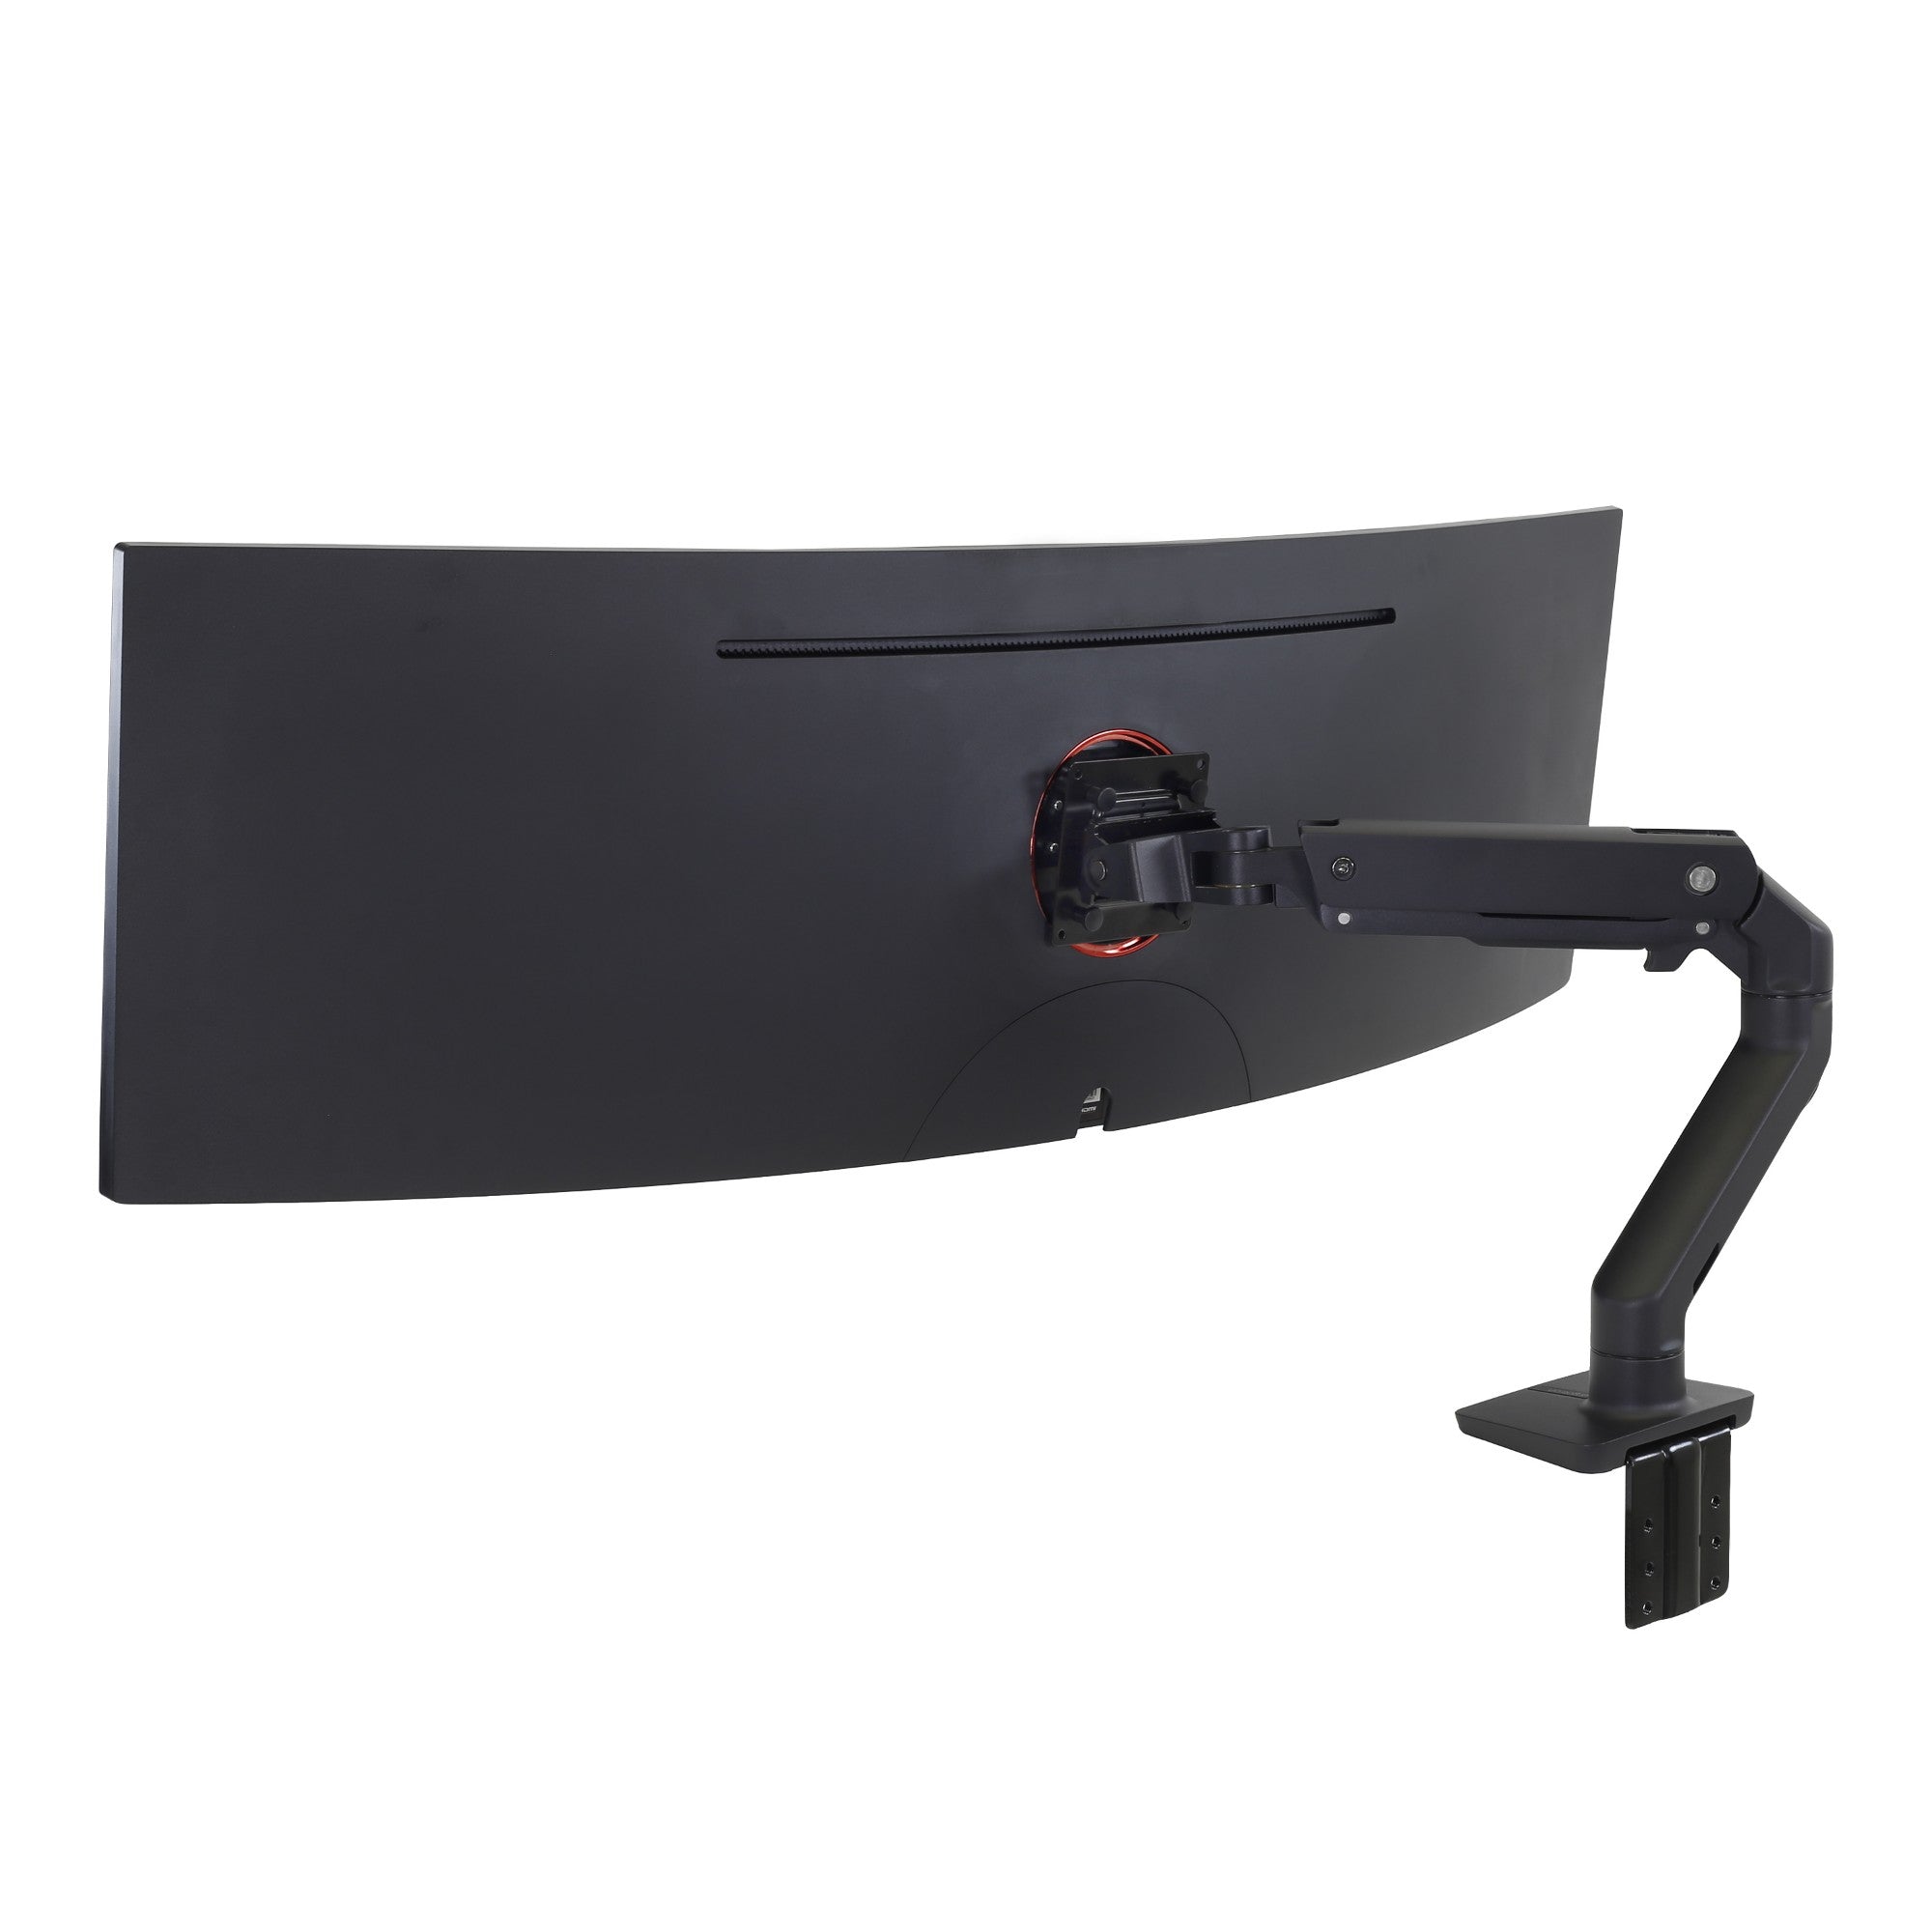 Ergotron HX Series 45-647-224 monitor mount / stand 124.5 cm (49") Black Desk